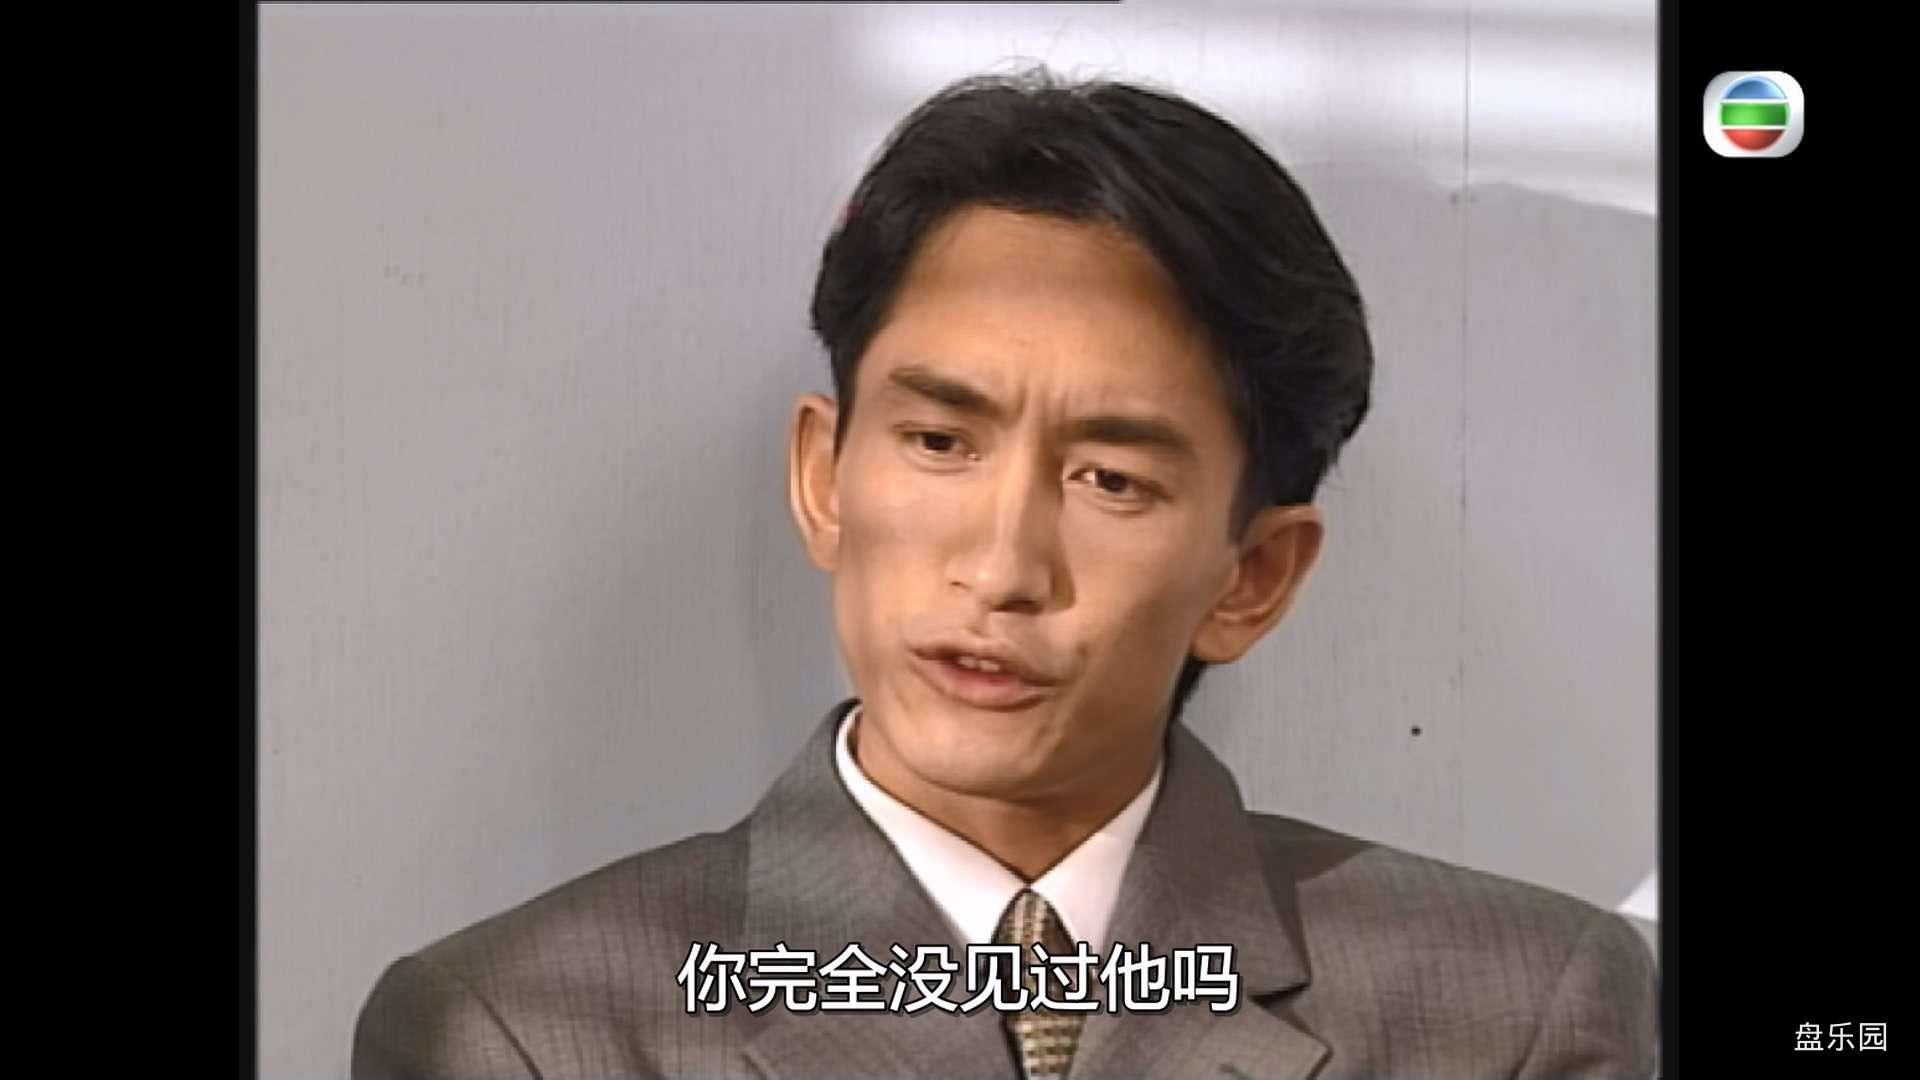 [壹号皇庭V].The.File.of.Justice.1997.S05E06.myTVSUPER.WEB-DL.1080p.HEVC.AAC-CMCT.jpg